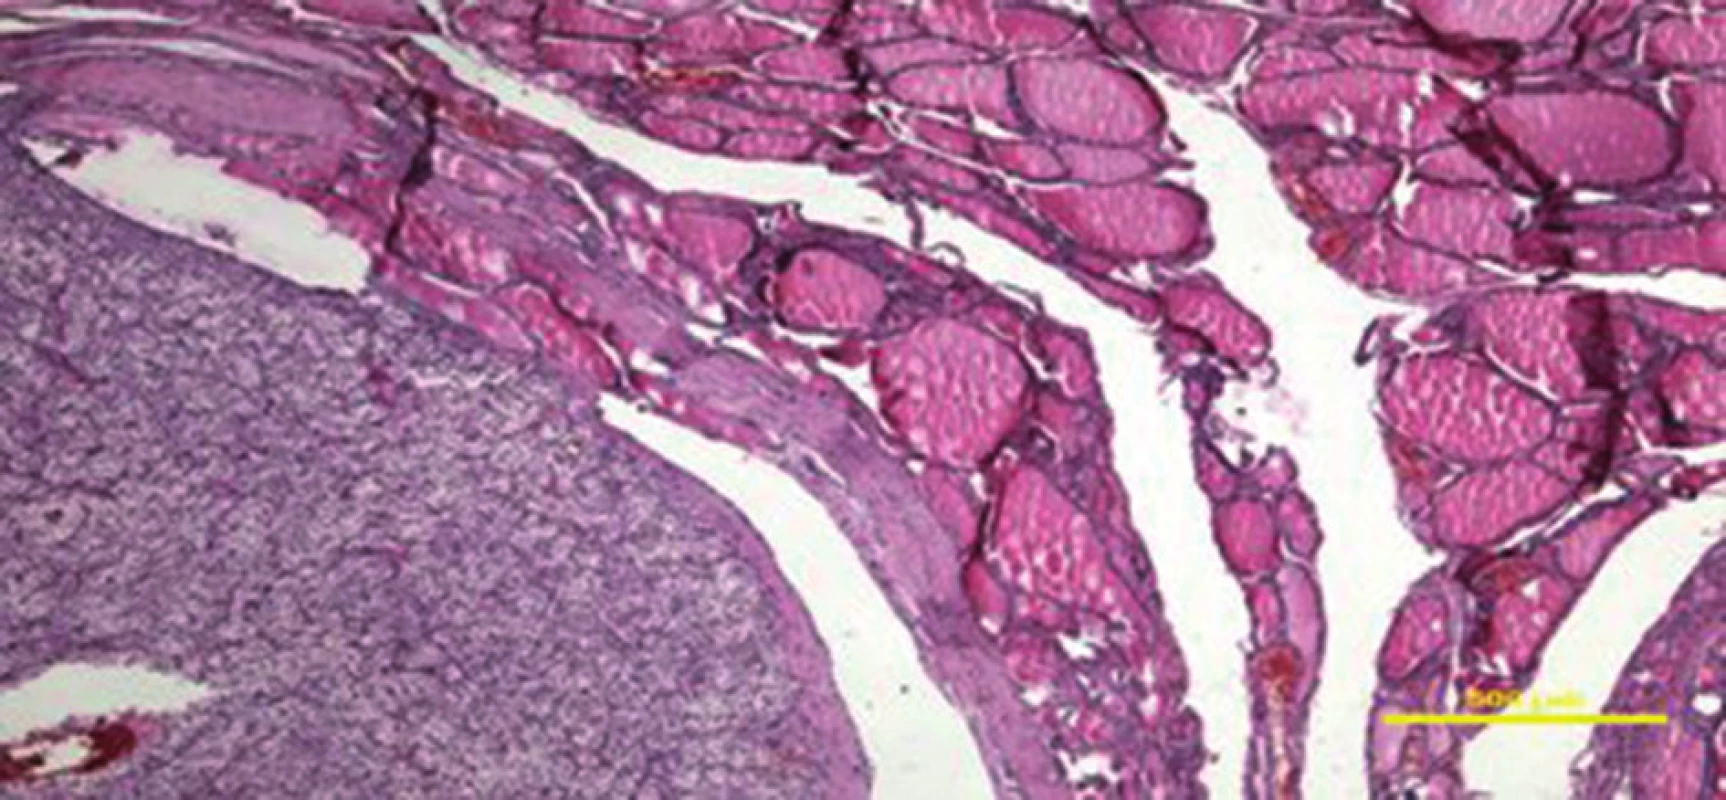 Histologický obraz – metastáza vlevo dole
Fig. 3: Histological image – metastasis below on the left